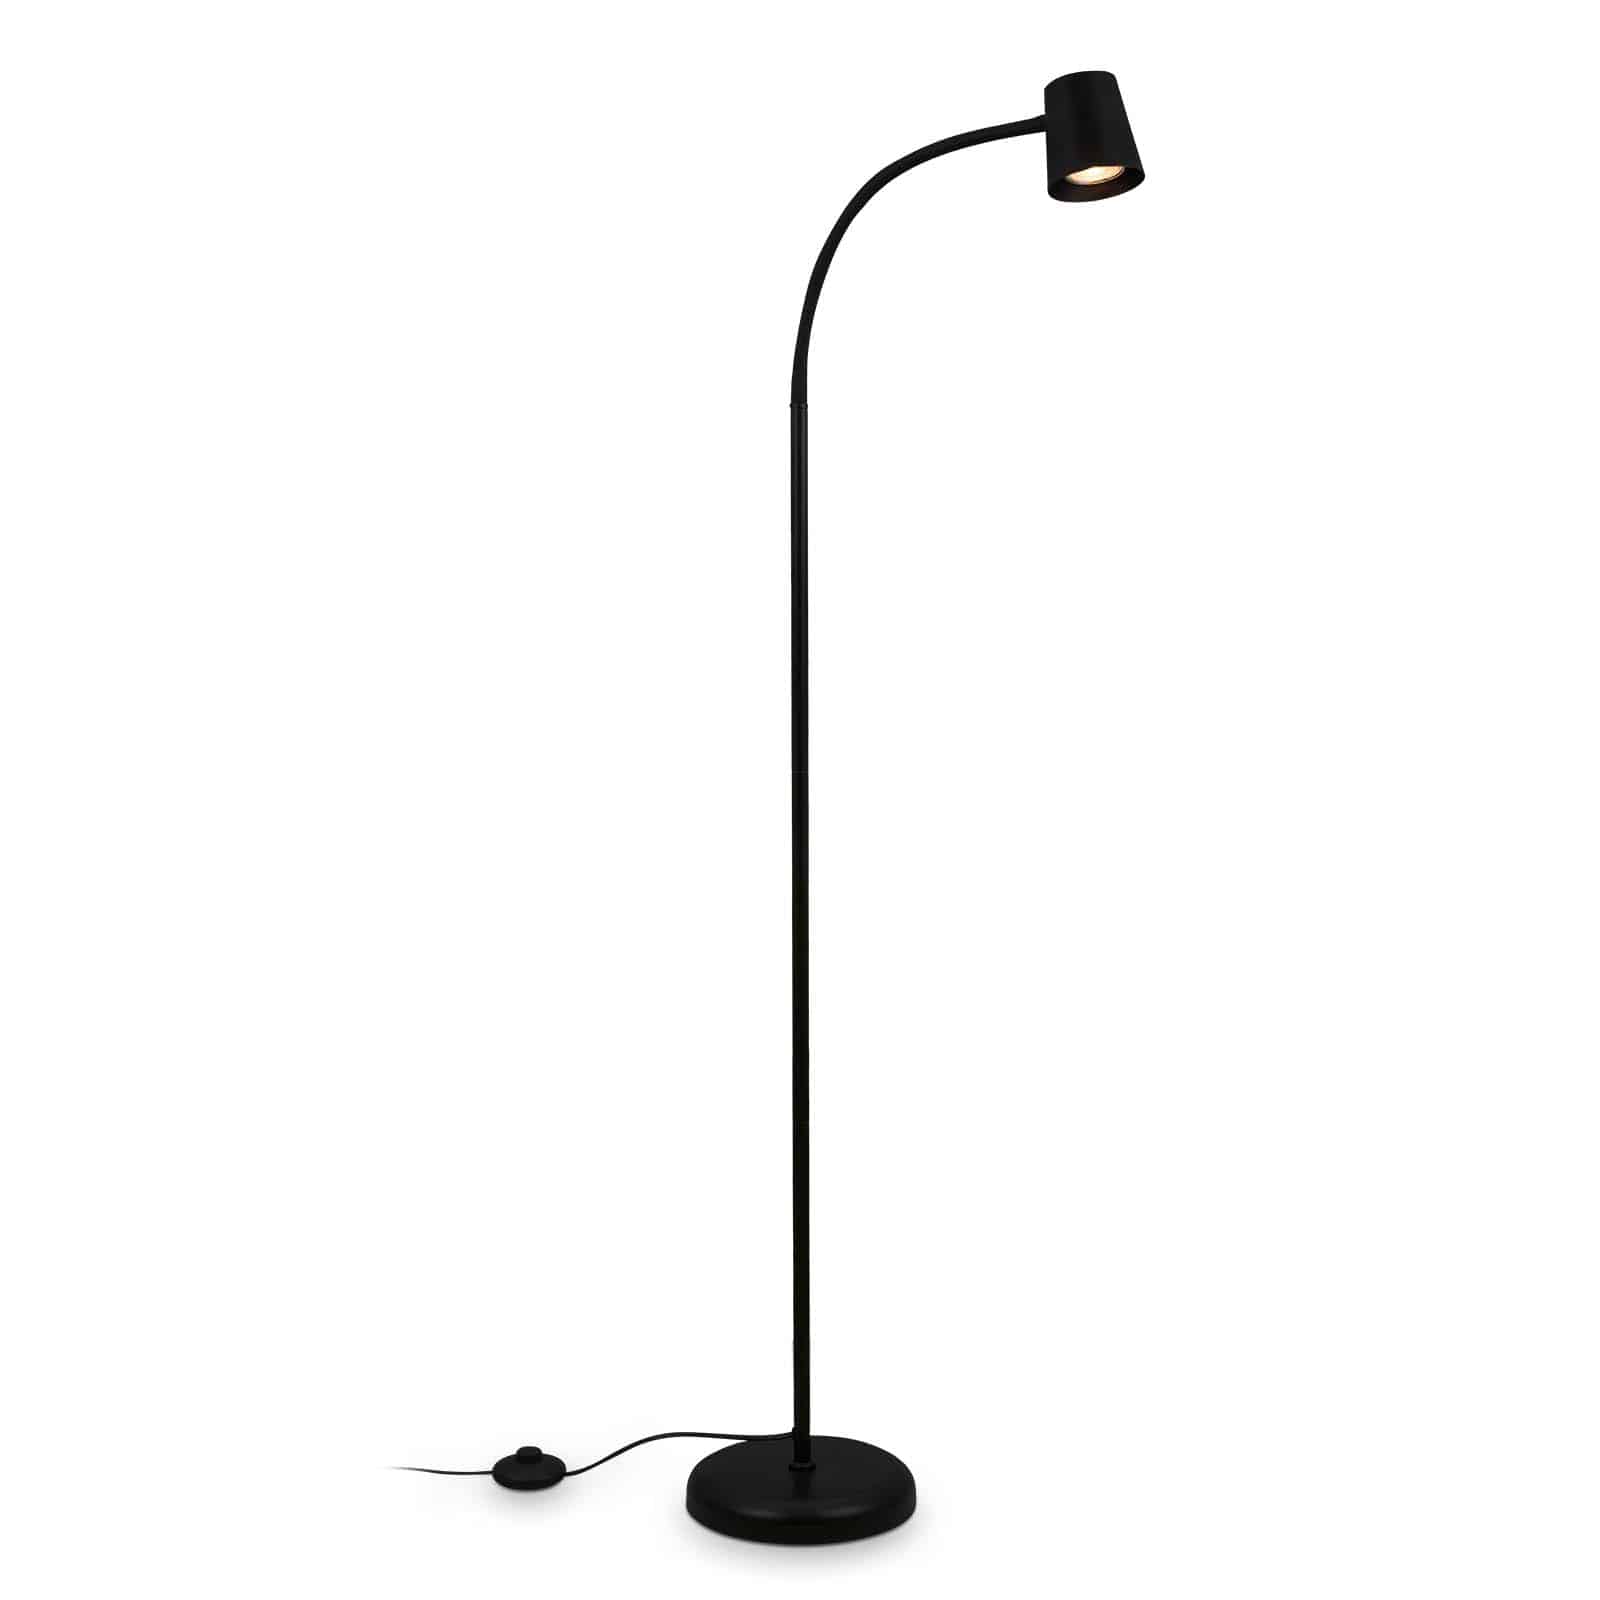 Standing lamp, 127.5 cm, 1x GU10, max. 9W, black